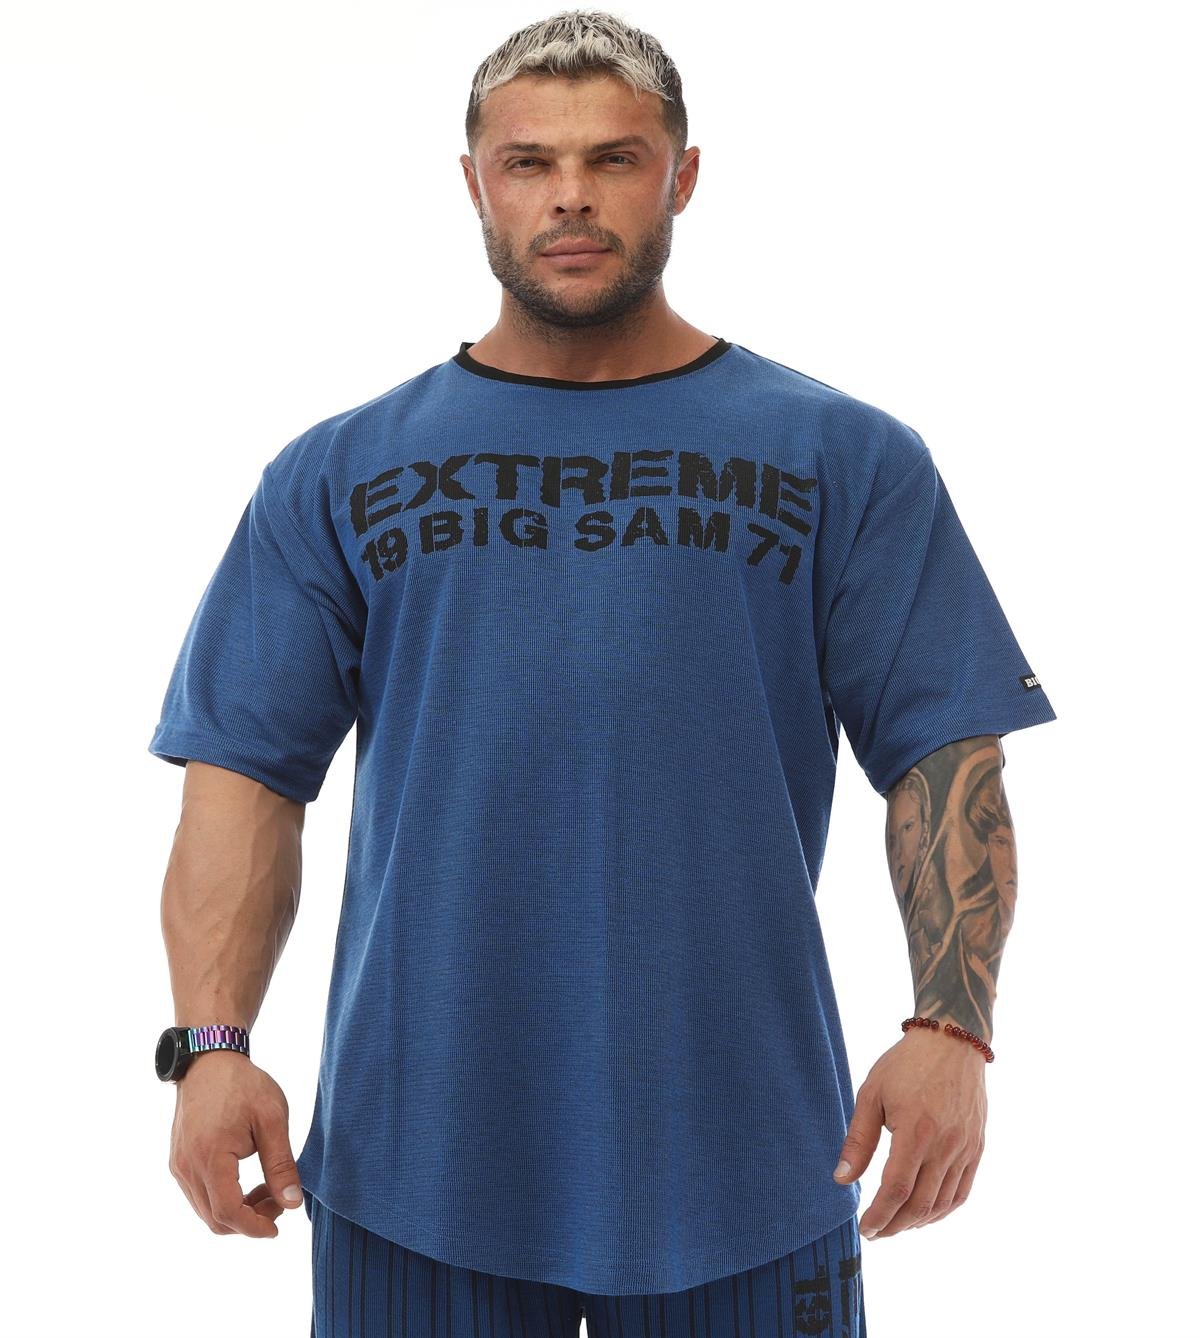 Oversize Rag Top Gym T-shirt 3330 BGSM Blue